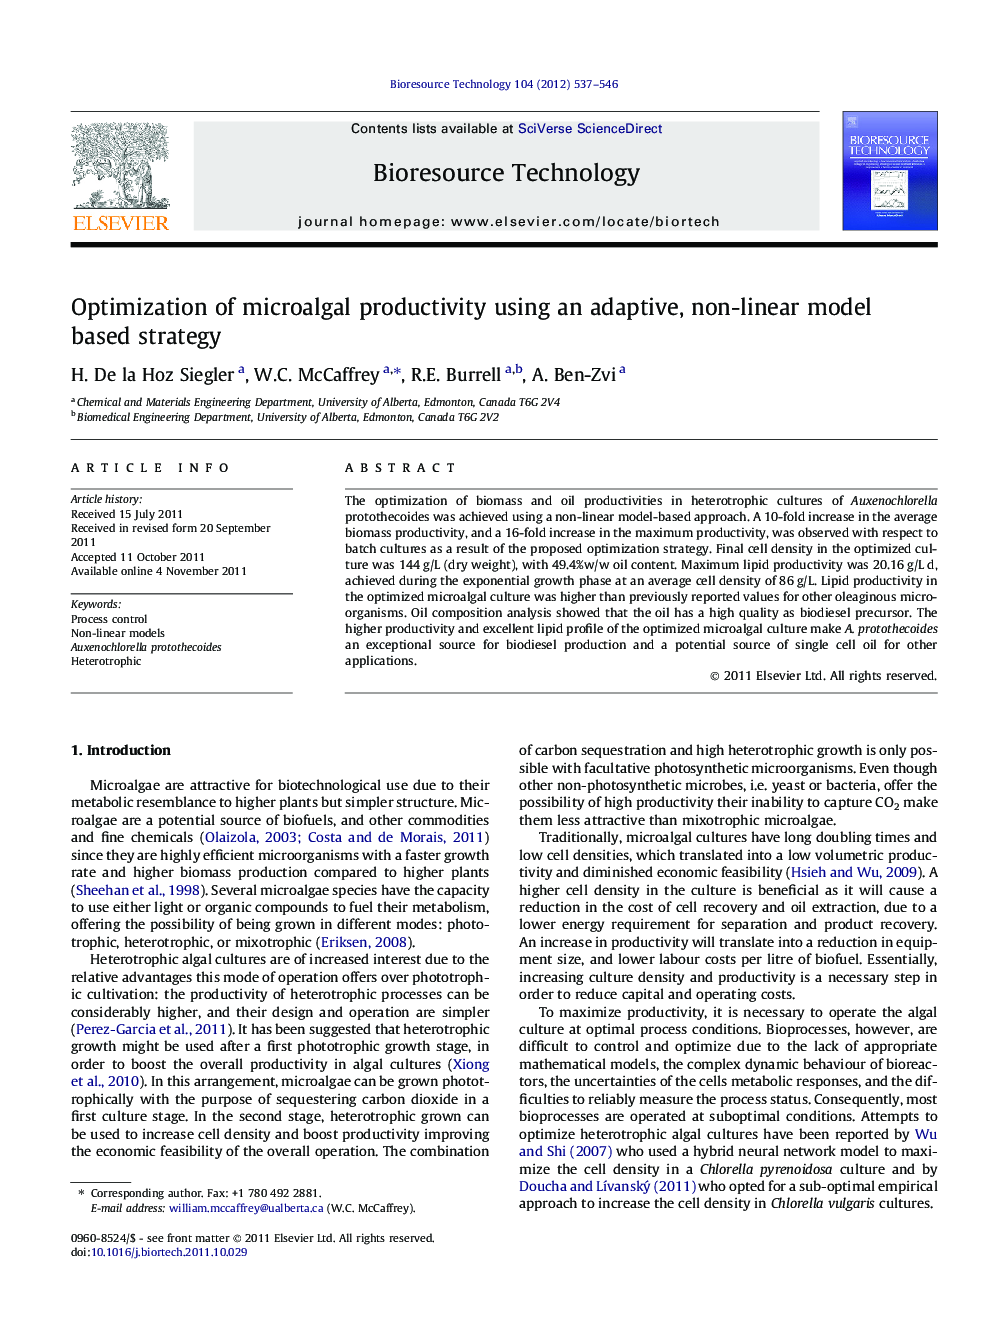 Optimization of microalgal productivity using an adaptive, non-linear model based strategy